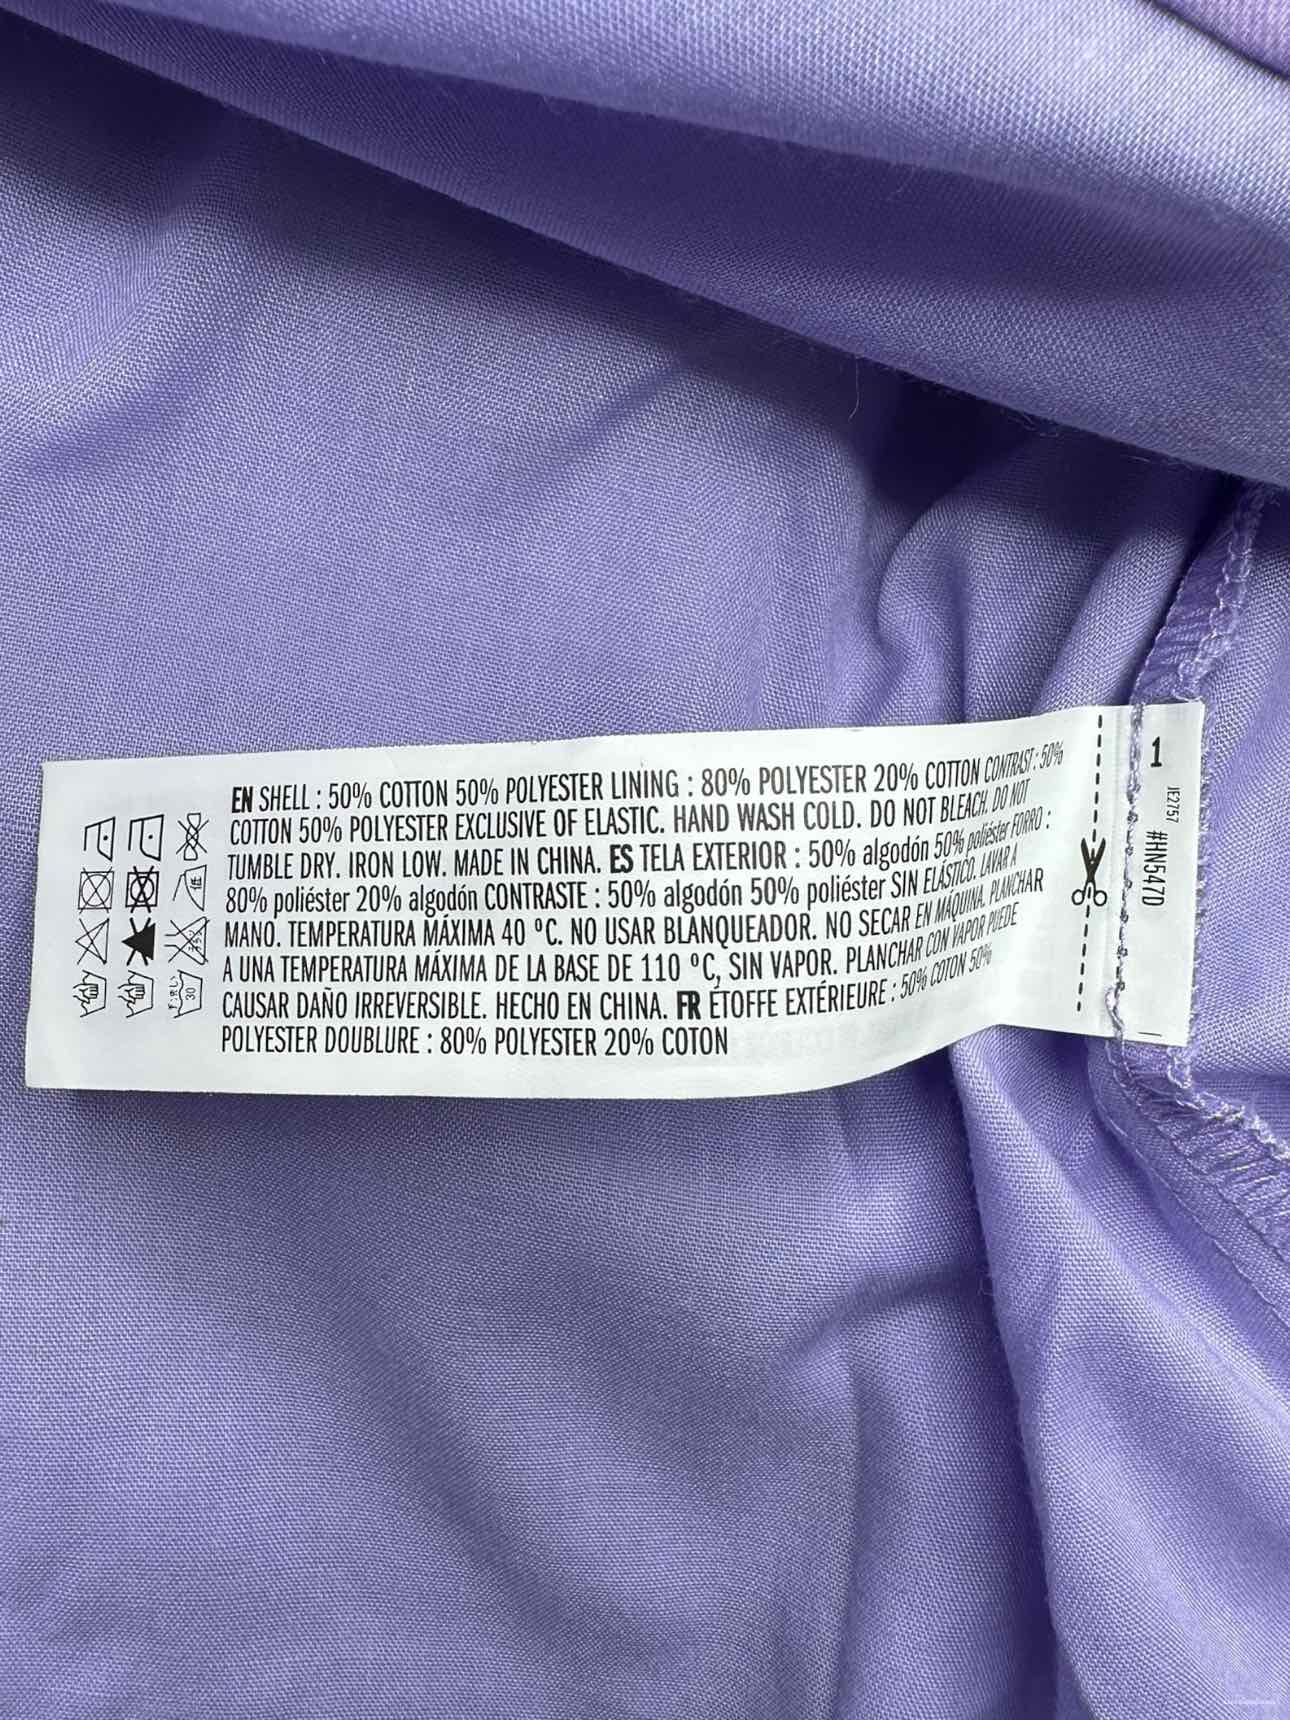 ENGLISH FACTORY NWT Purple Puff Sleeve Dress Size M